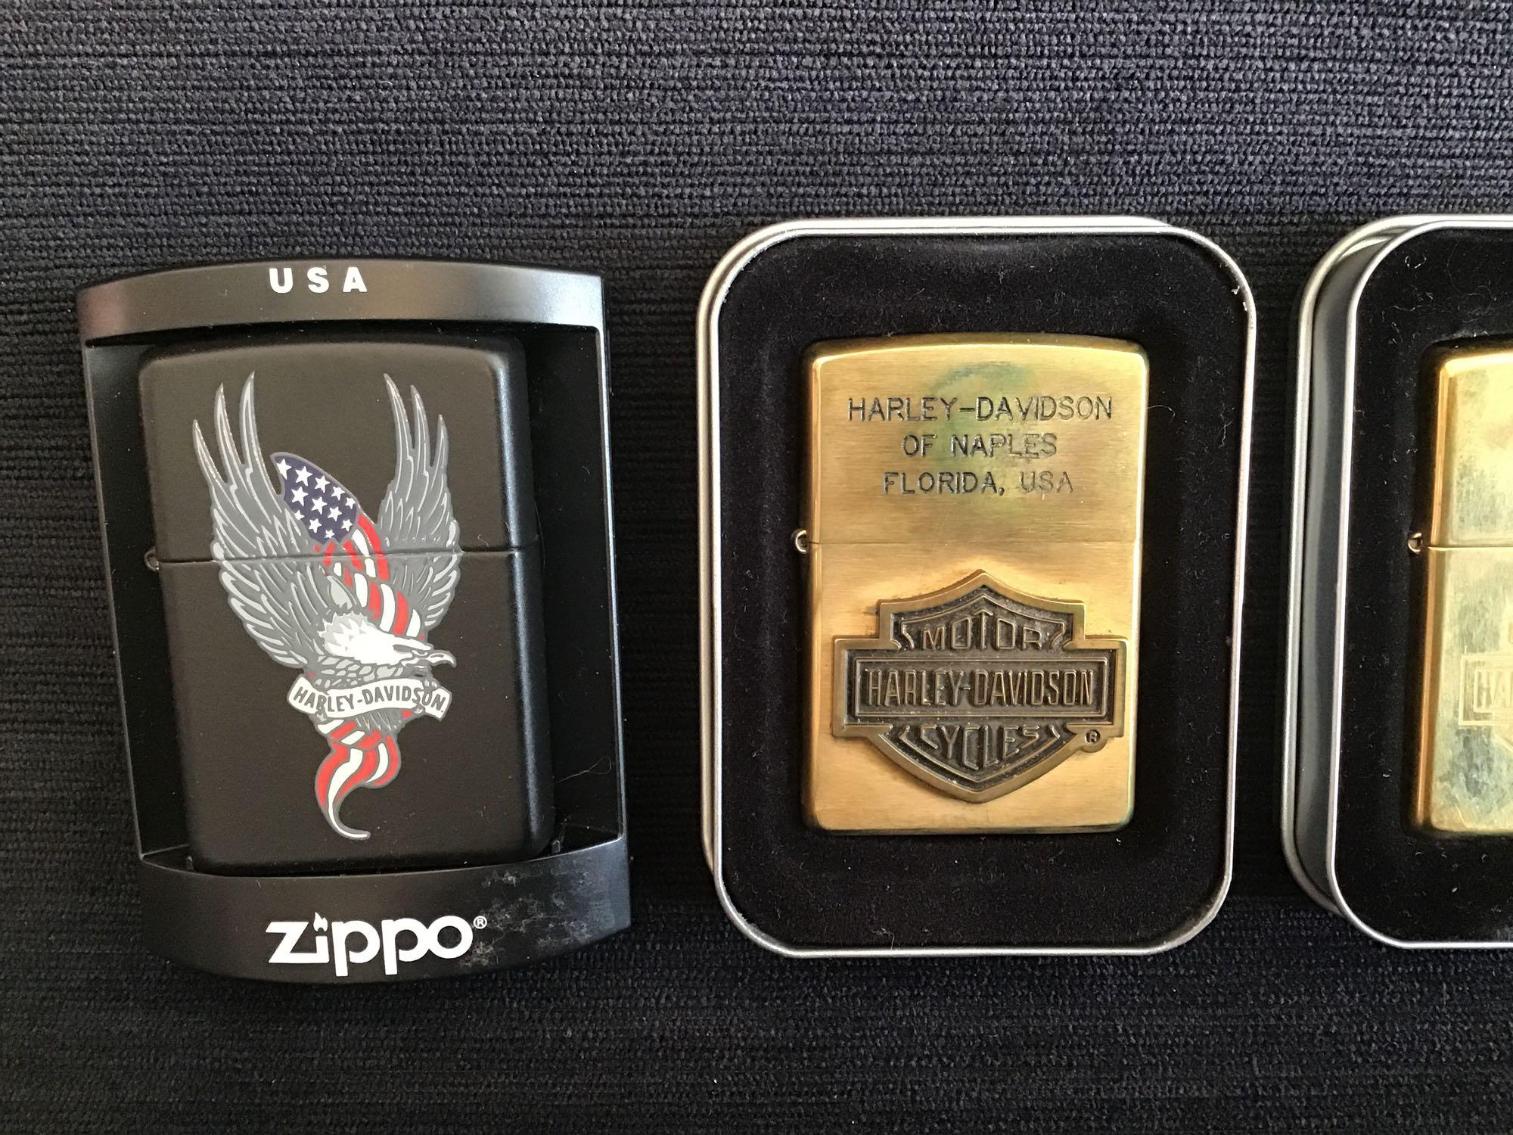 Image for Zippo Harley Davidson Lighters